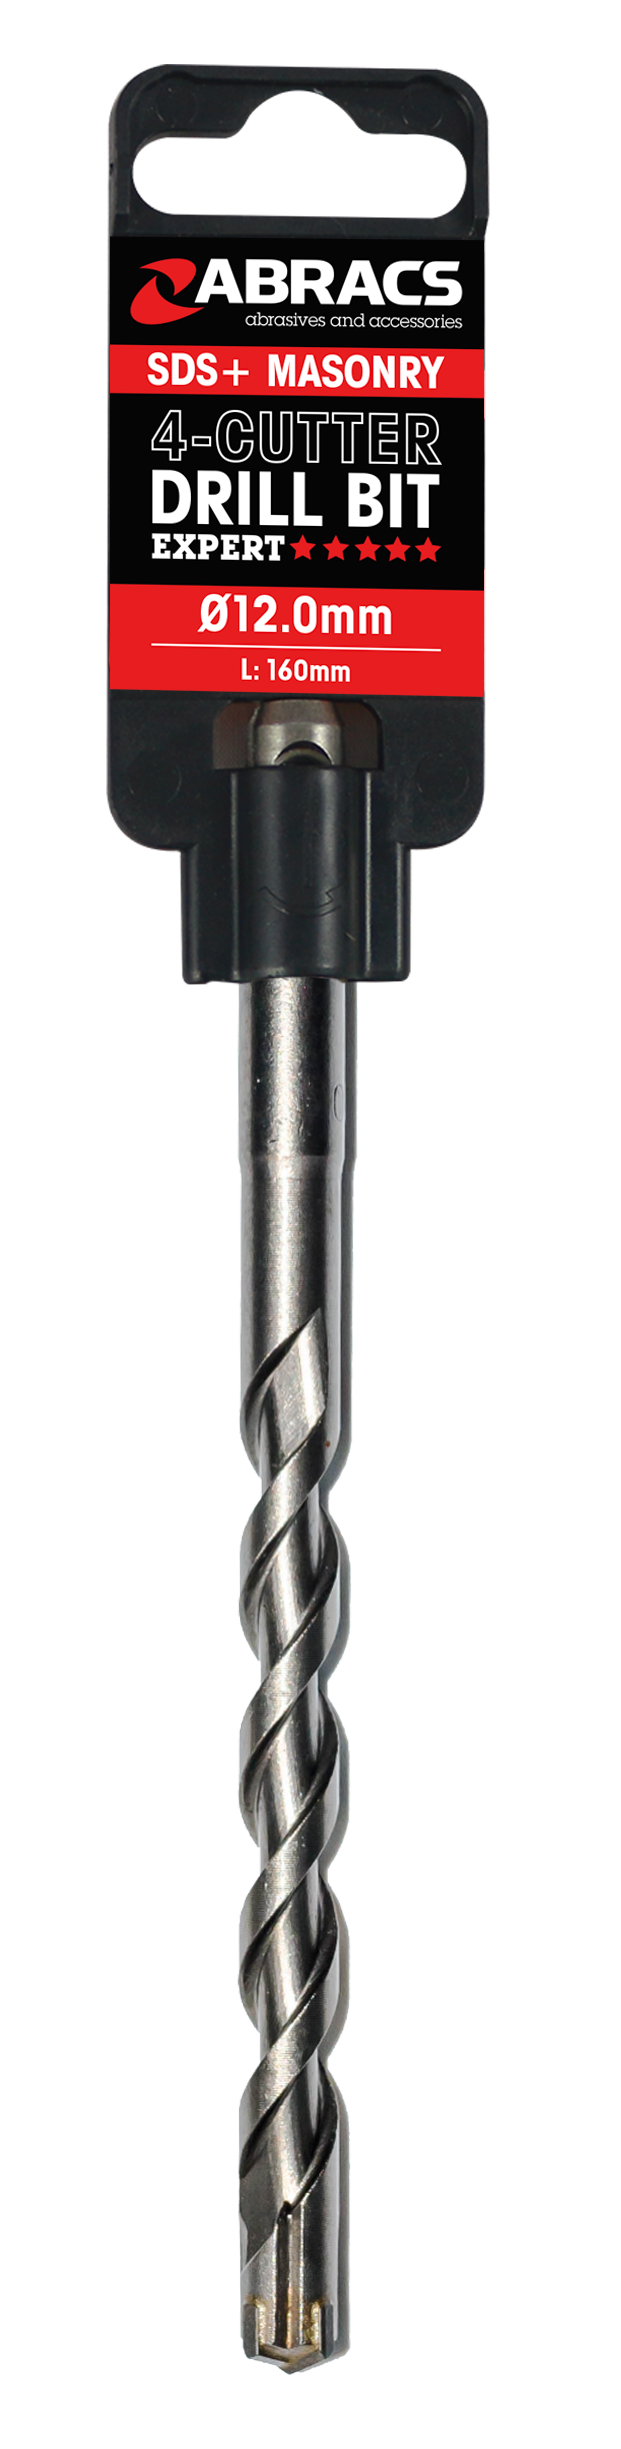 DBCX065160 6.5mm x 160mm SDS+ Masonry Drill Bit - 4 Cutter